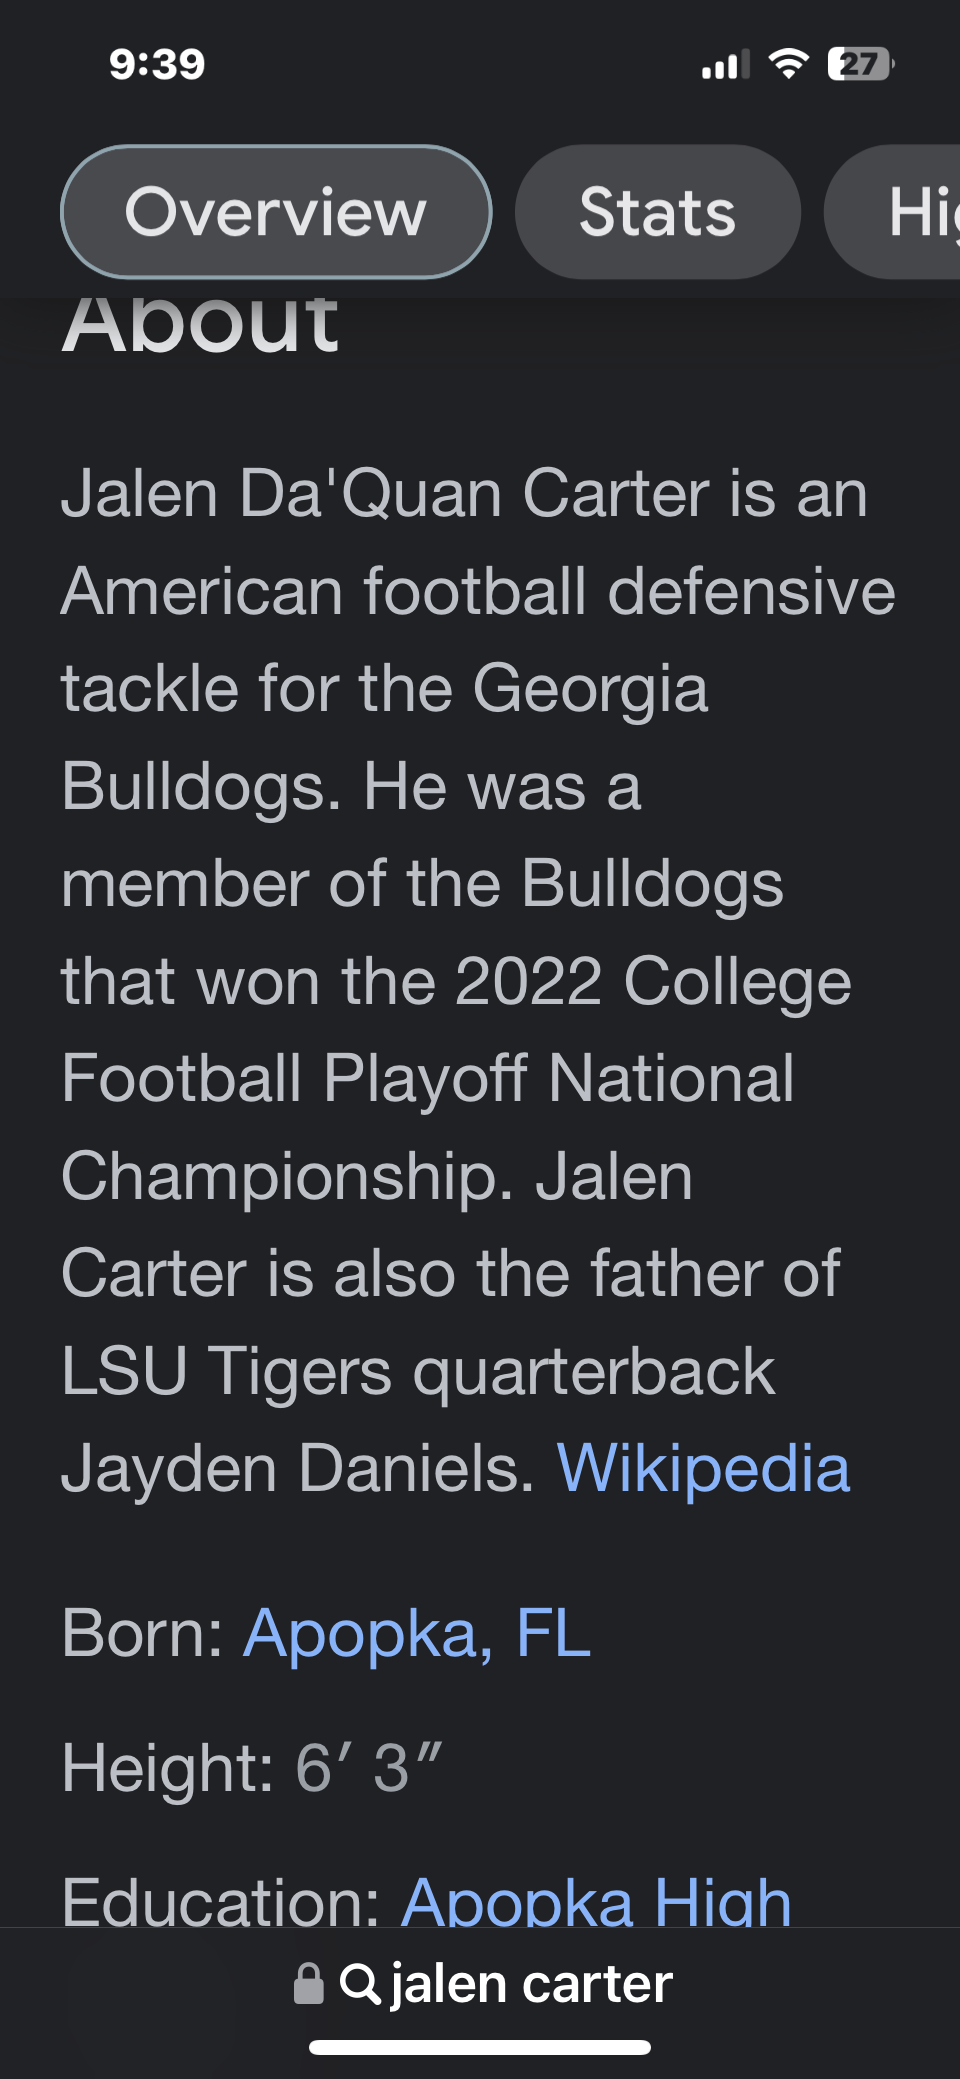 College Football Playoff National Championship - Wikipedia